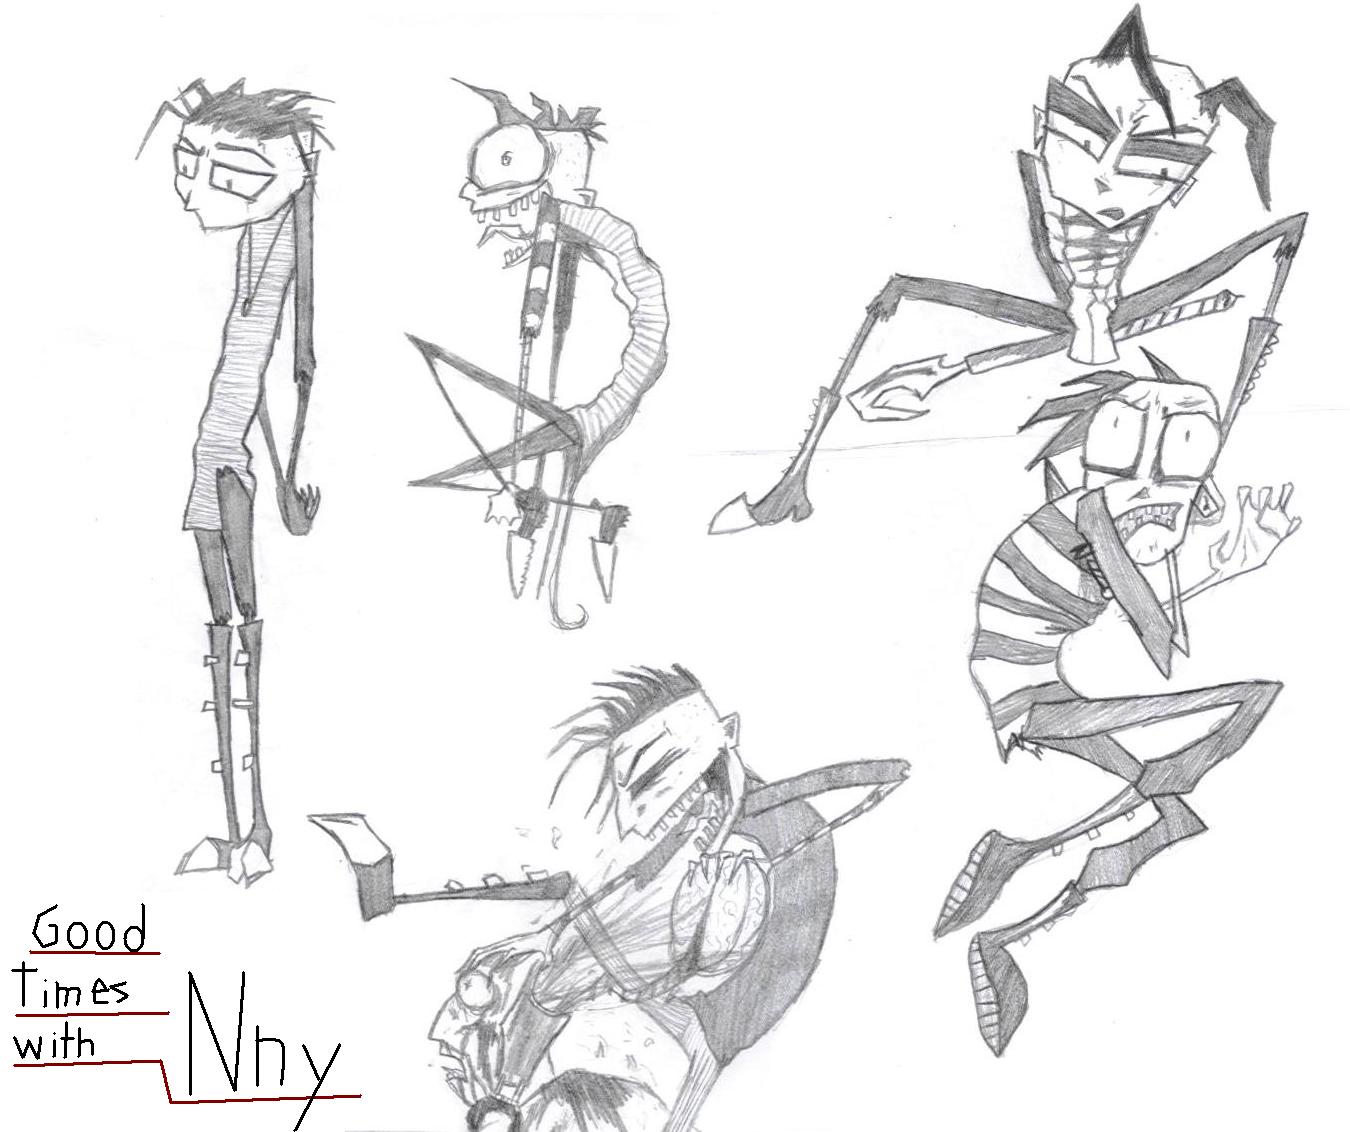 Nny sketches by InvaderDIV